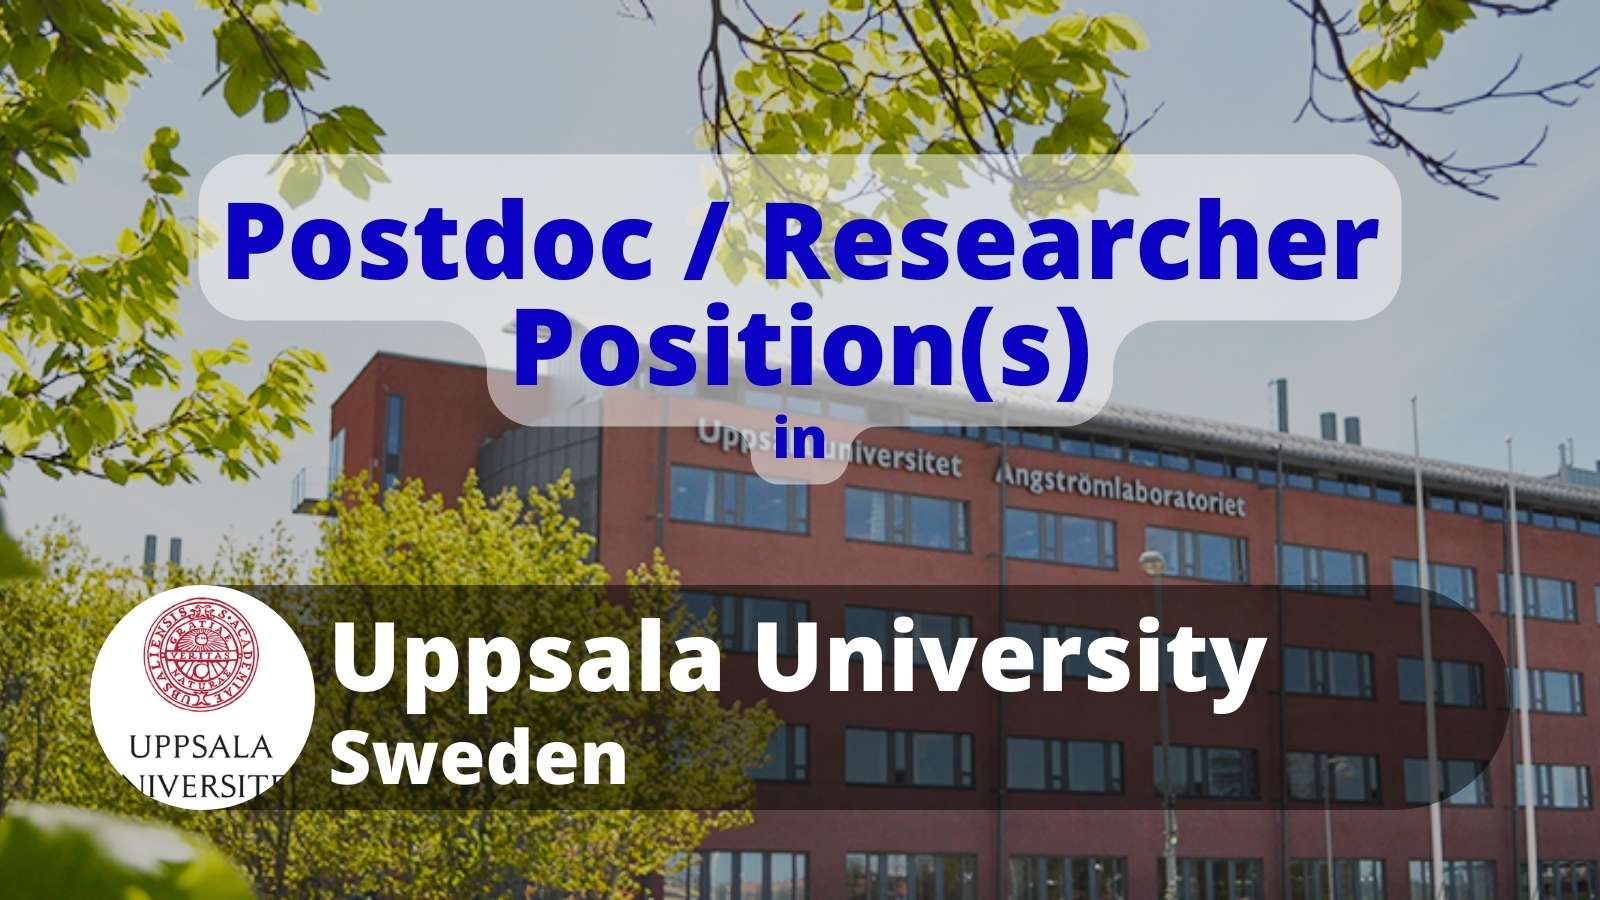 Postdoc Researcher Positions in Uppsala University Sweden